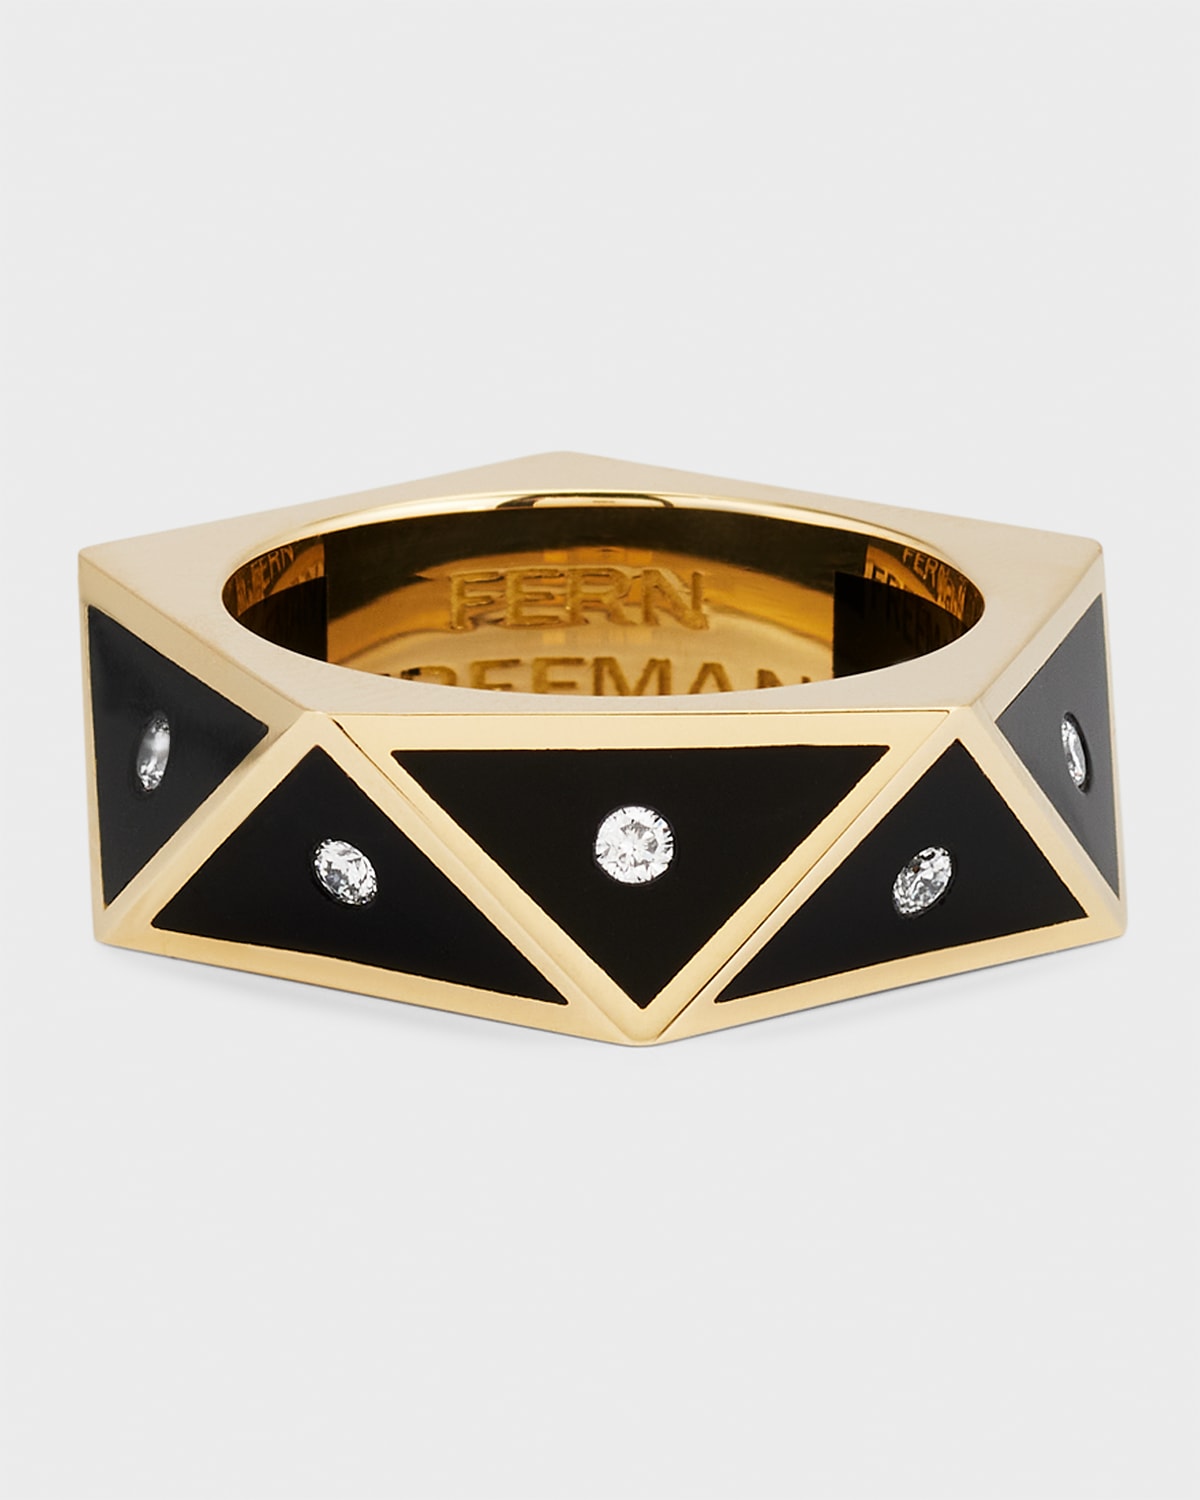 Fern Freeman Jewelry 18k Yellow Gold Black Ceramic Pentagon Ring With Diamonds